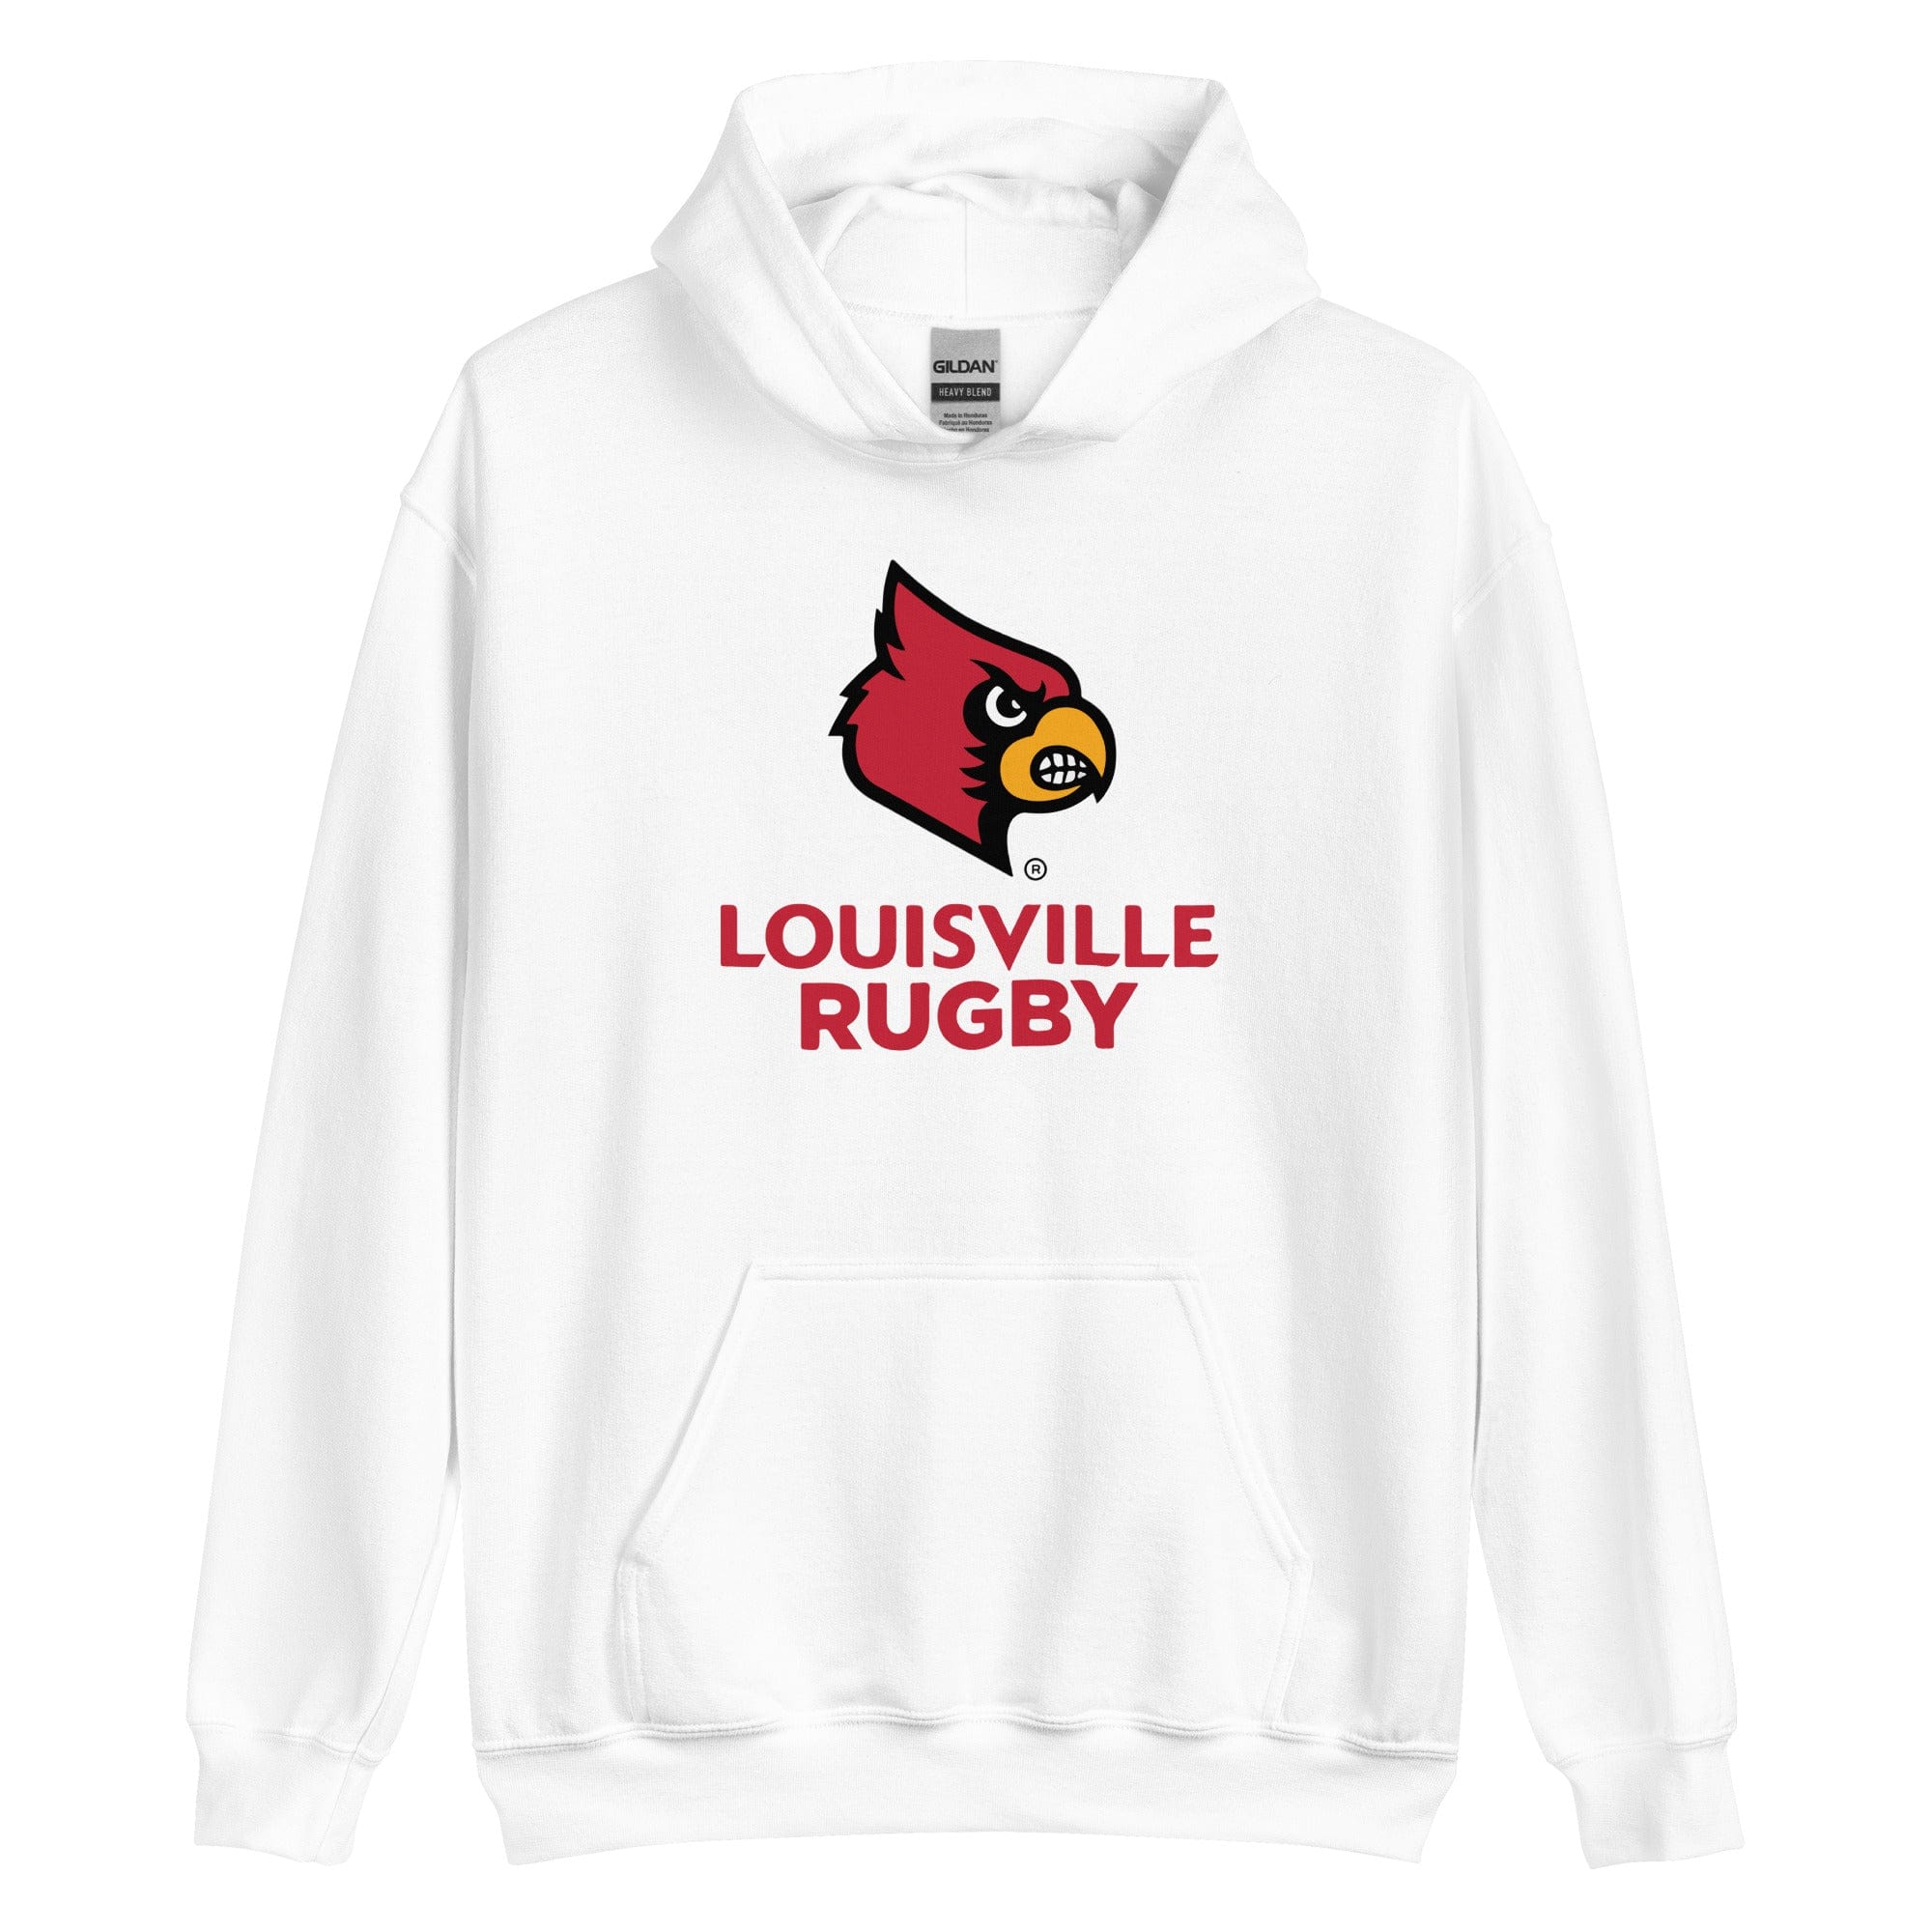 Vintage University of Louisville Sweatshirt - 3XL